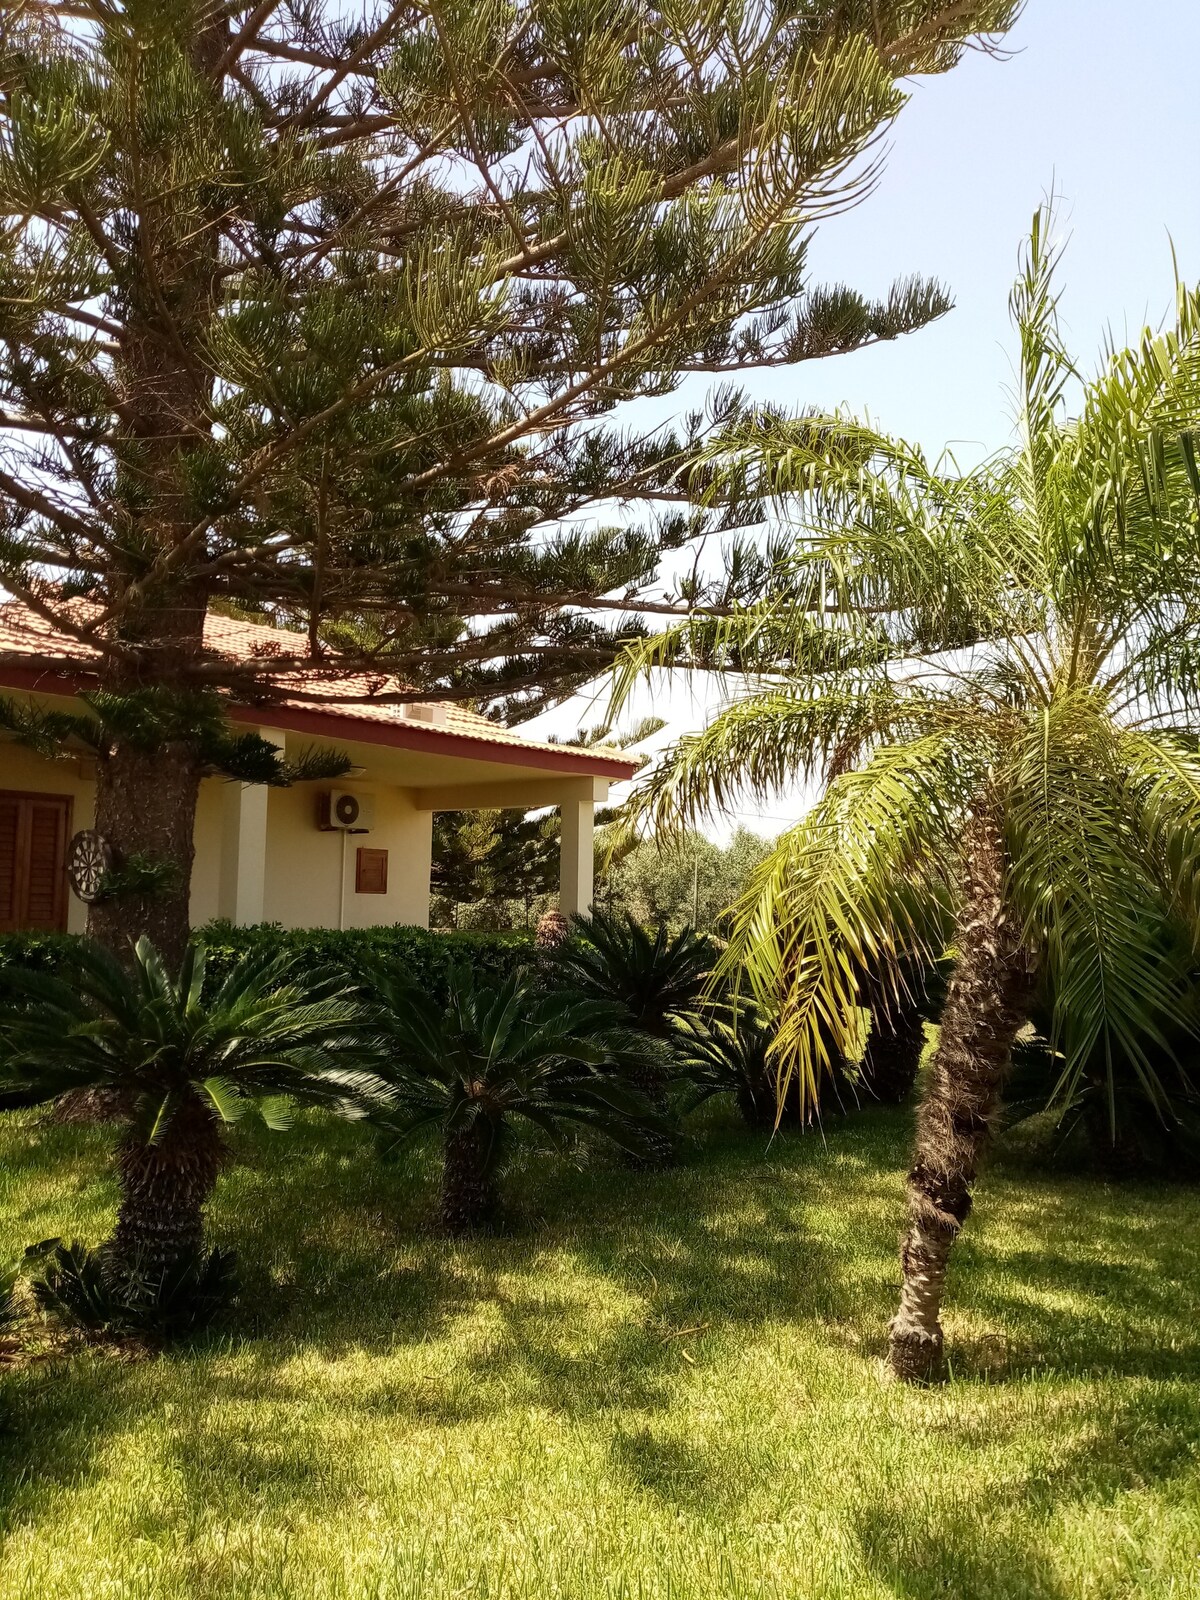 「Villa Ariadduci」，四周环绕着绿植和宁静